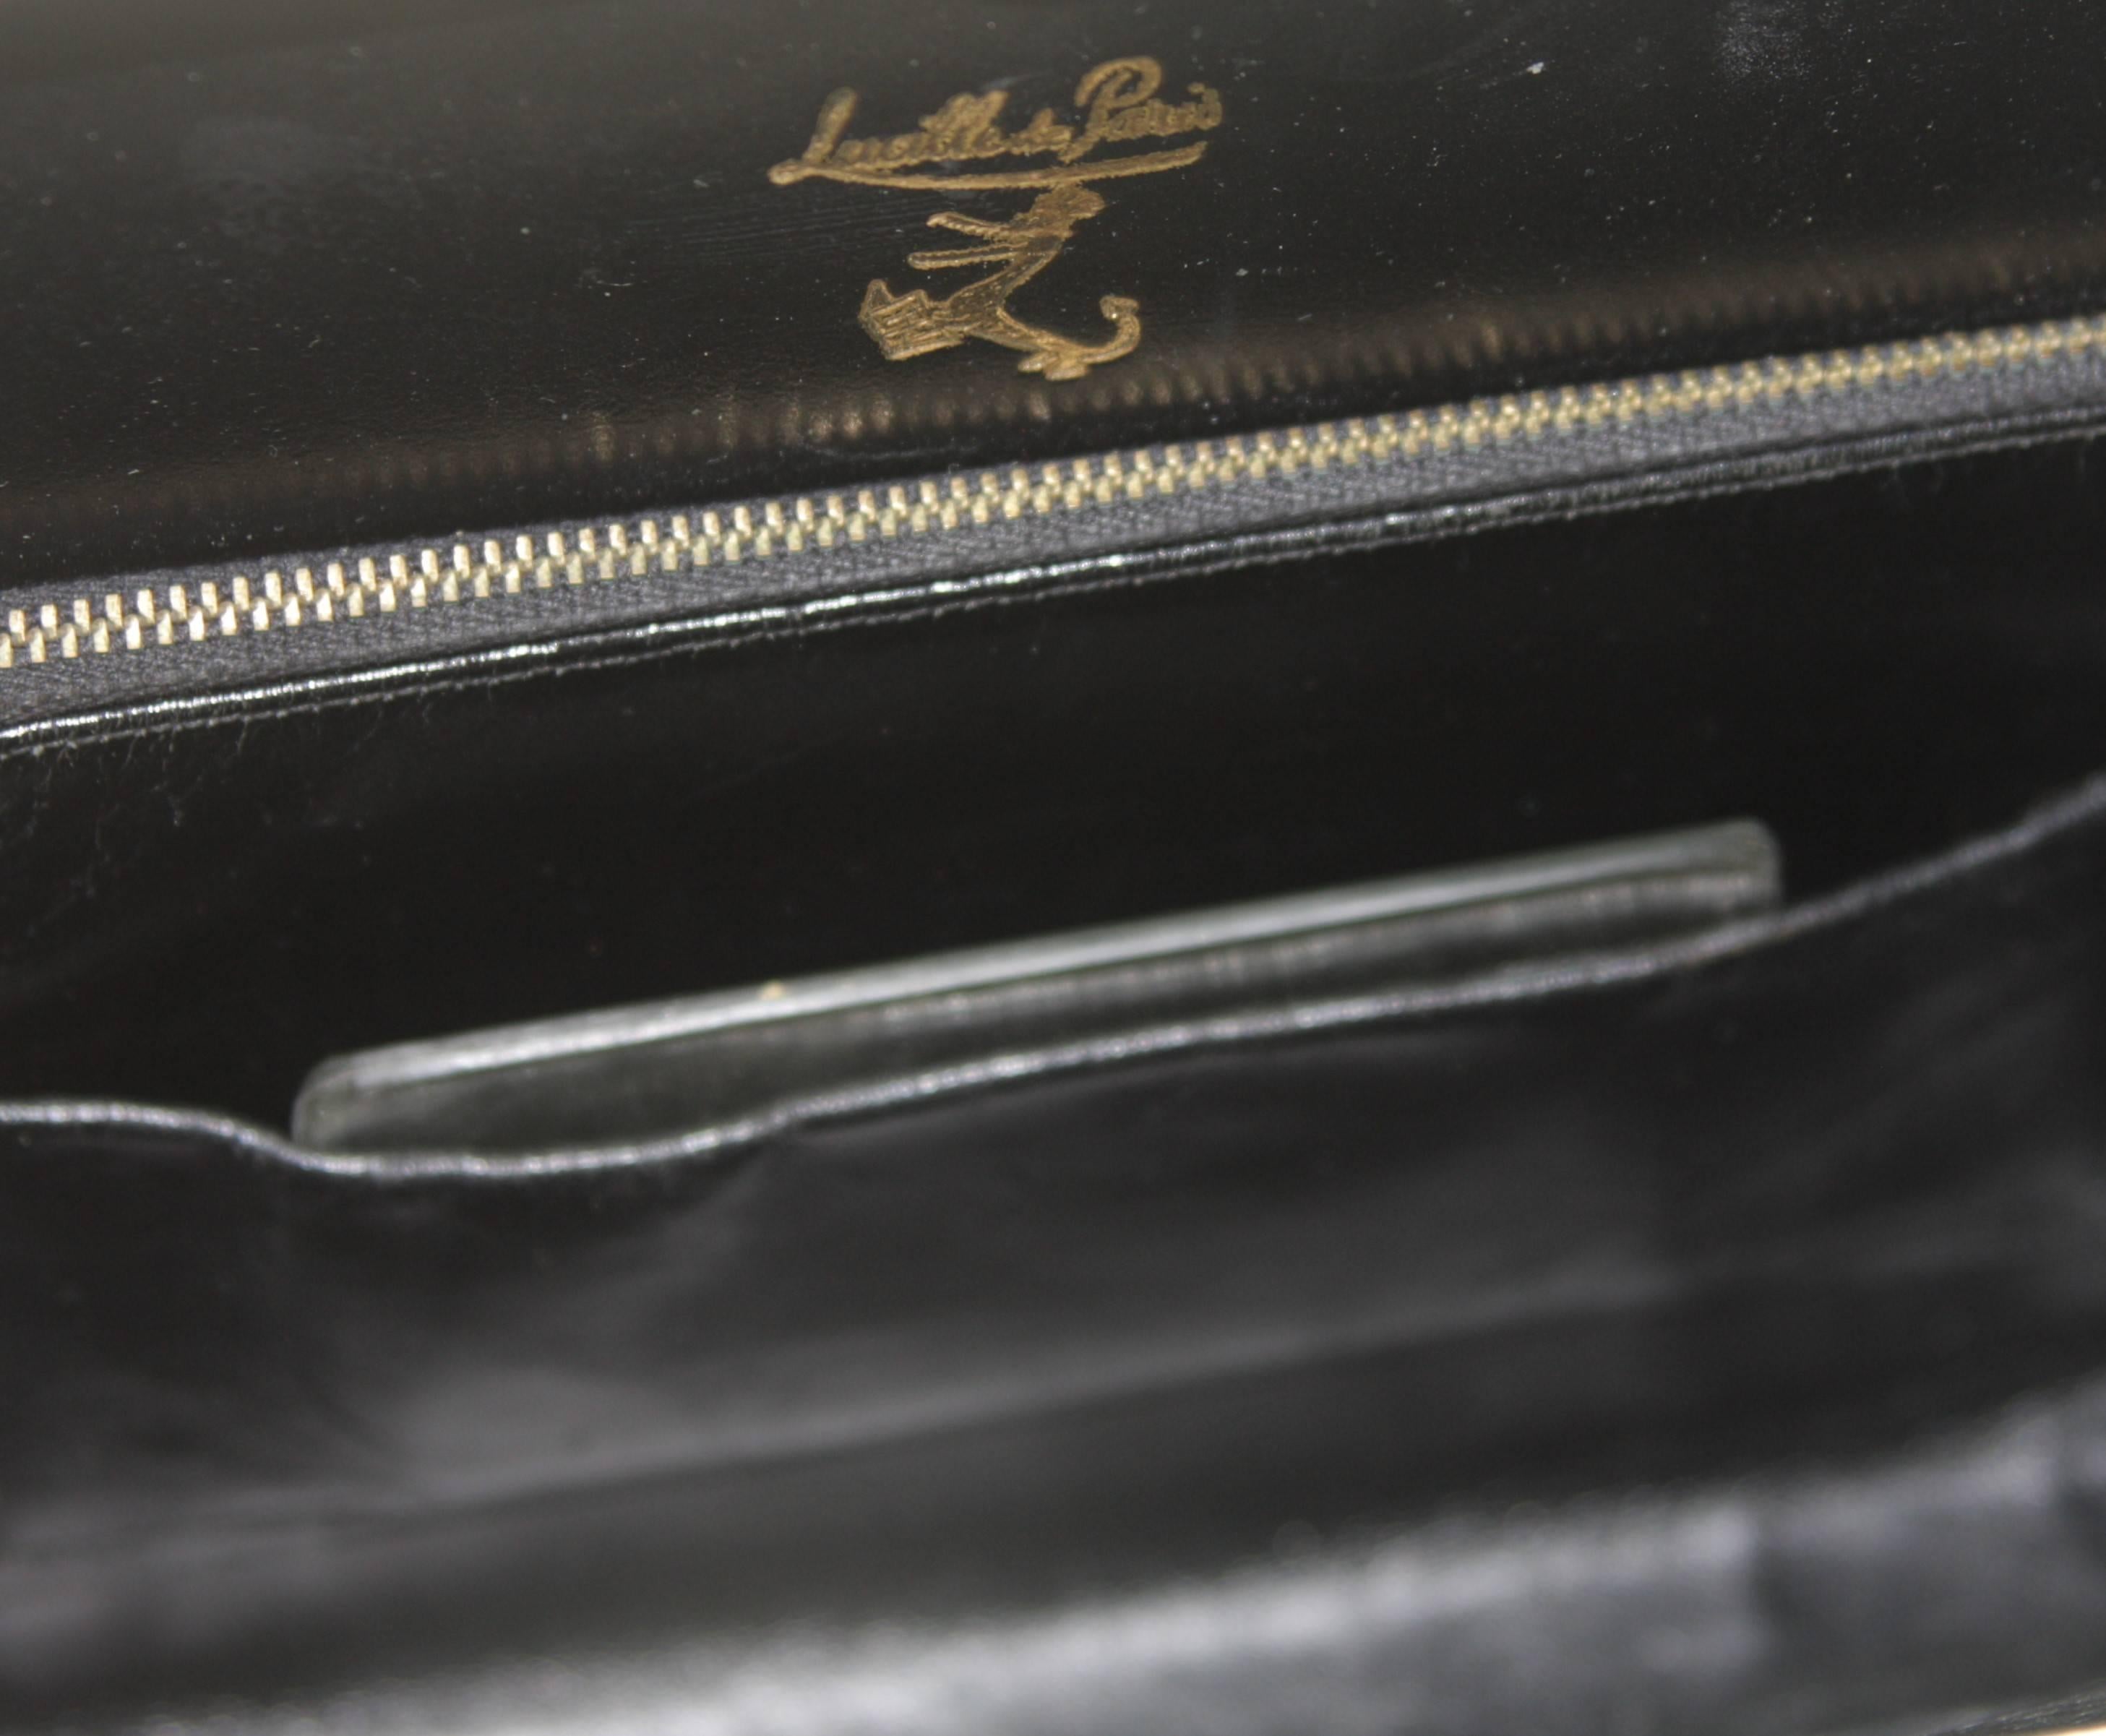 Lucille De Paris Black Ostrich Frame Handbag with Gold Hardware 4